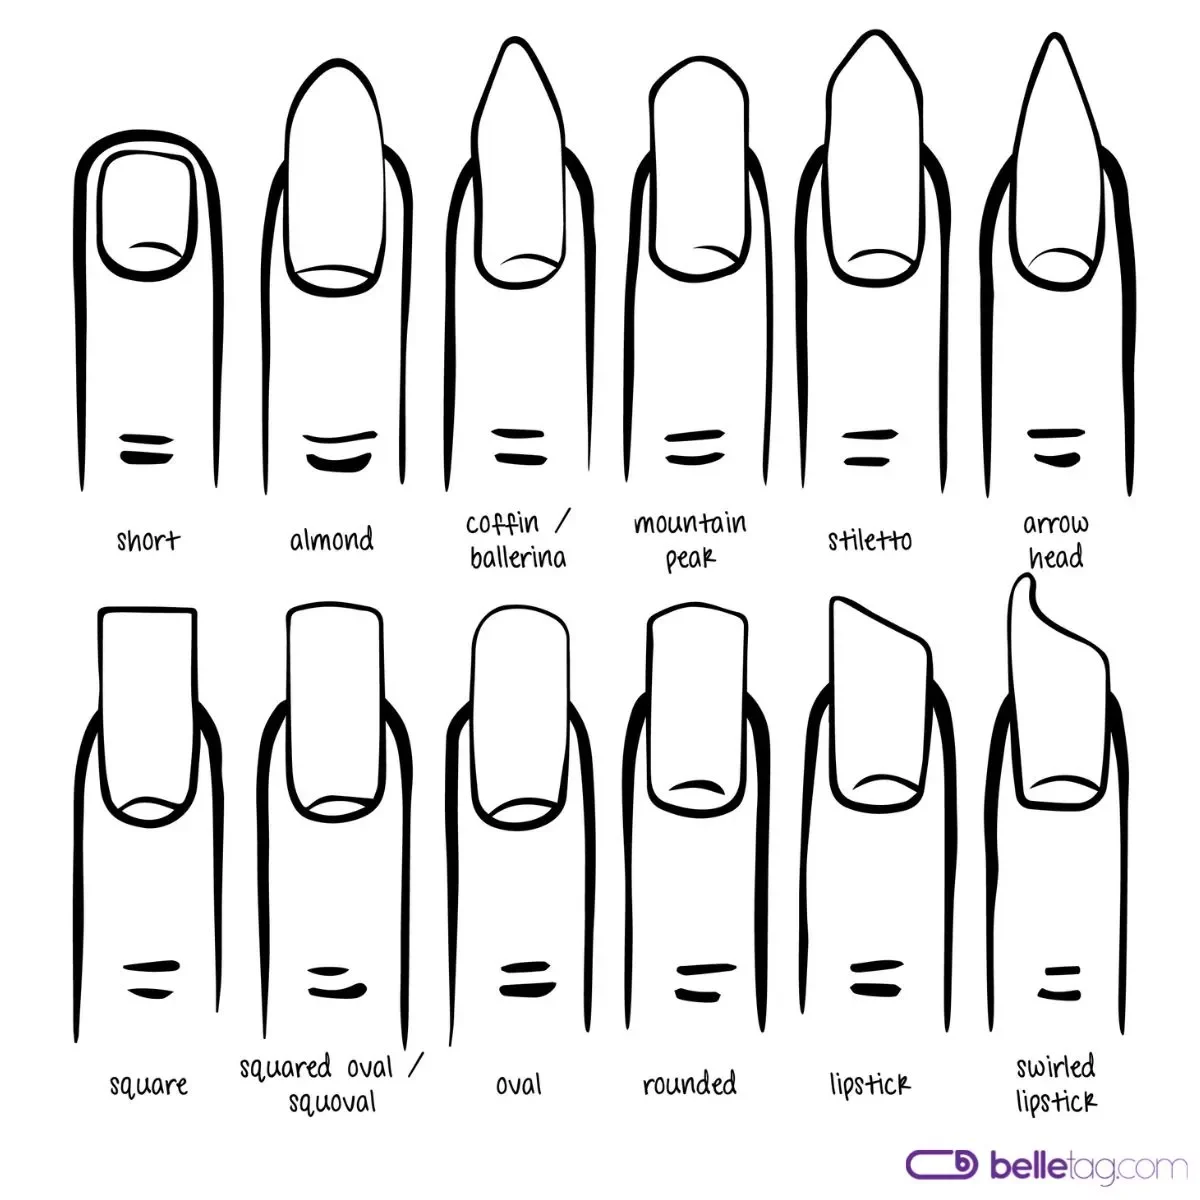 12 most common nail shapes